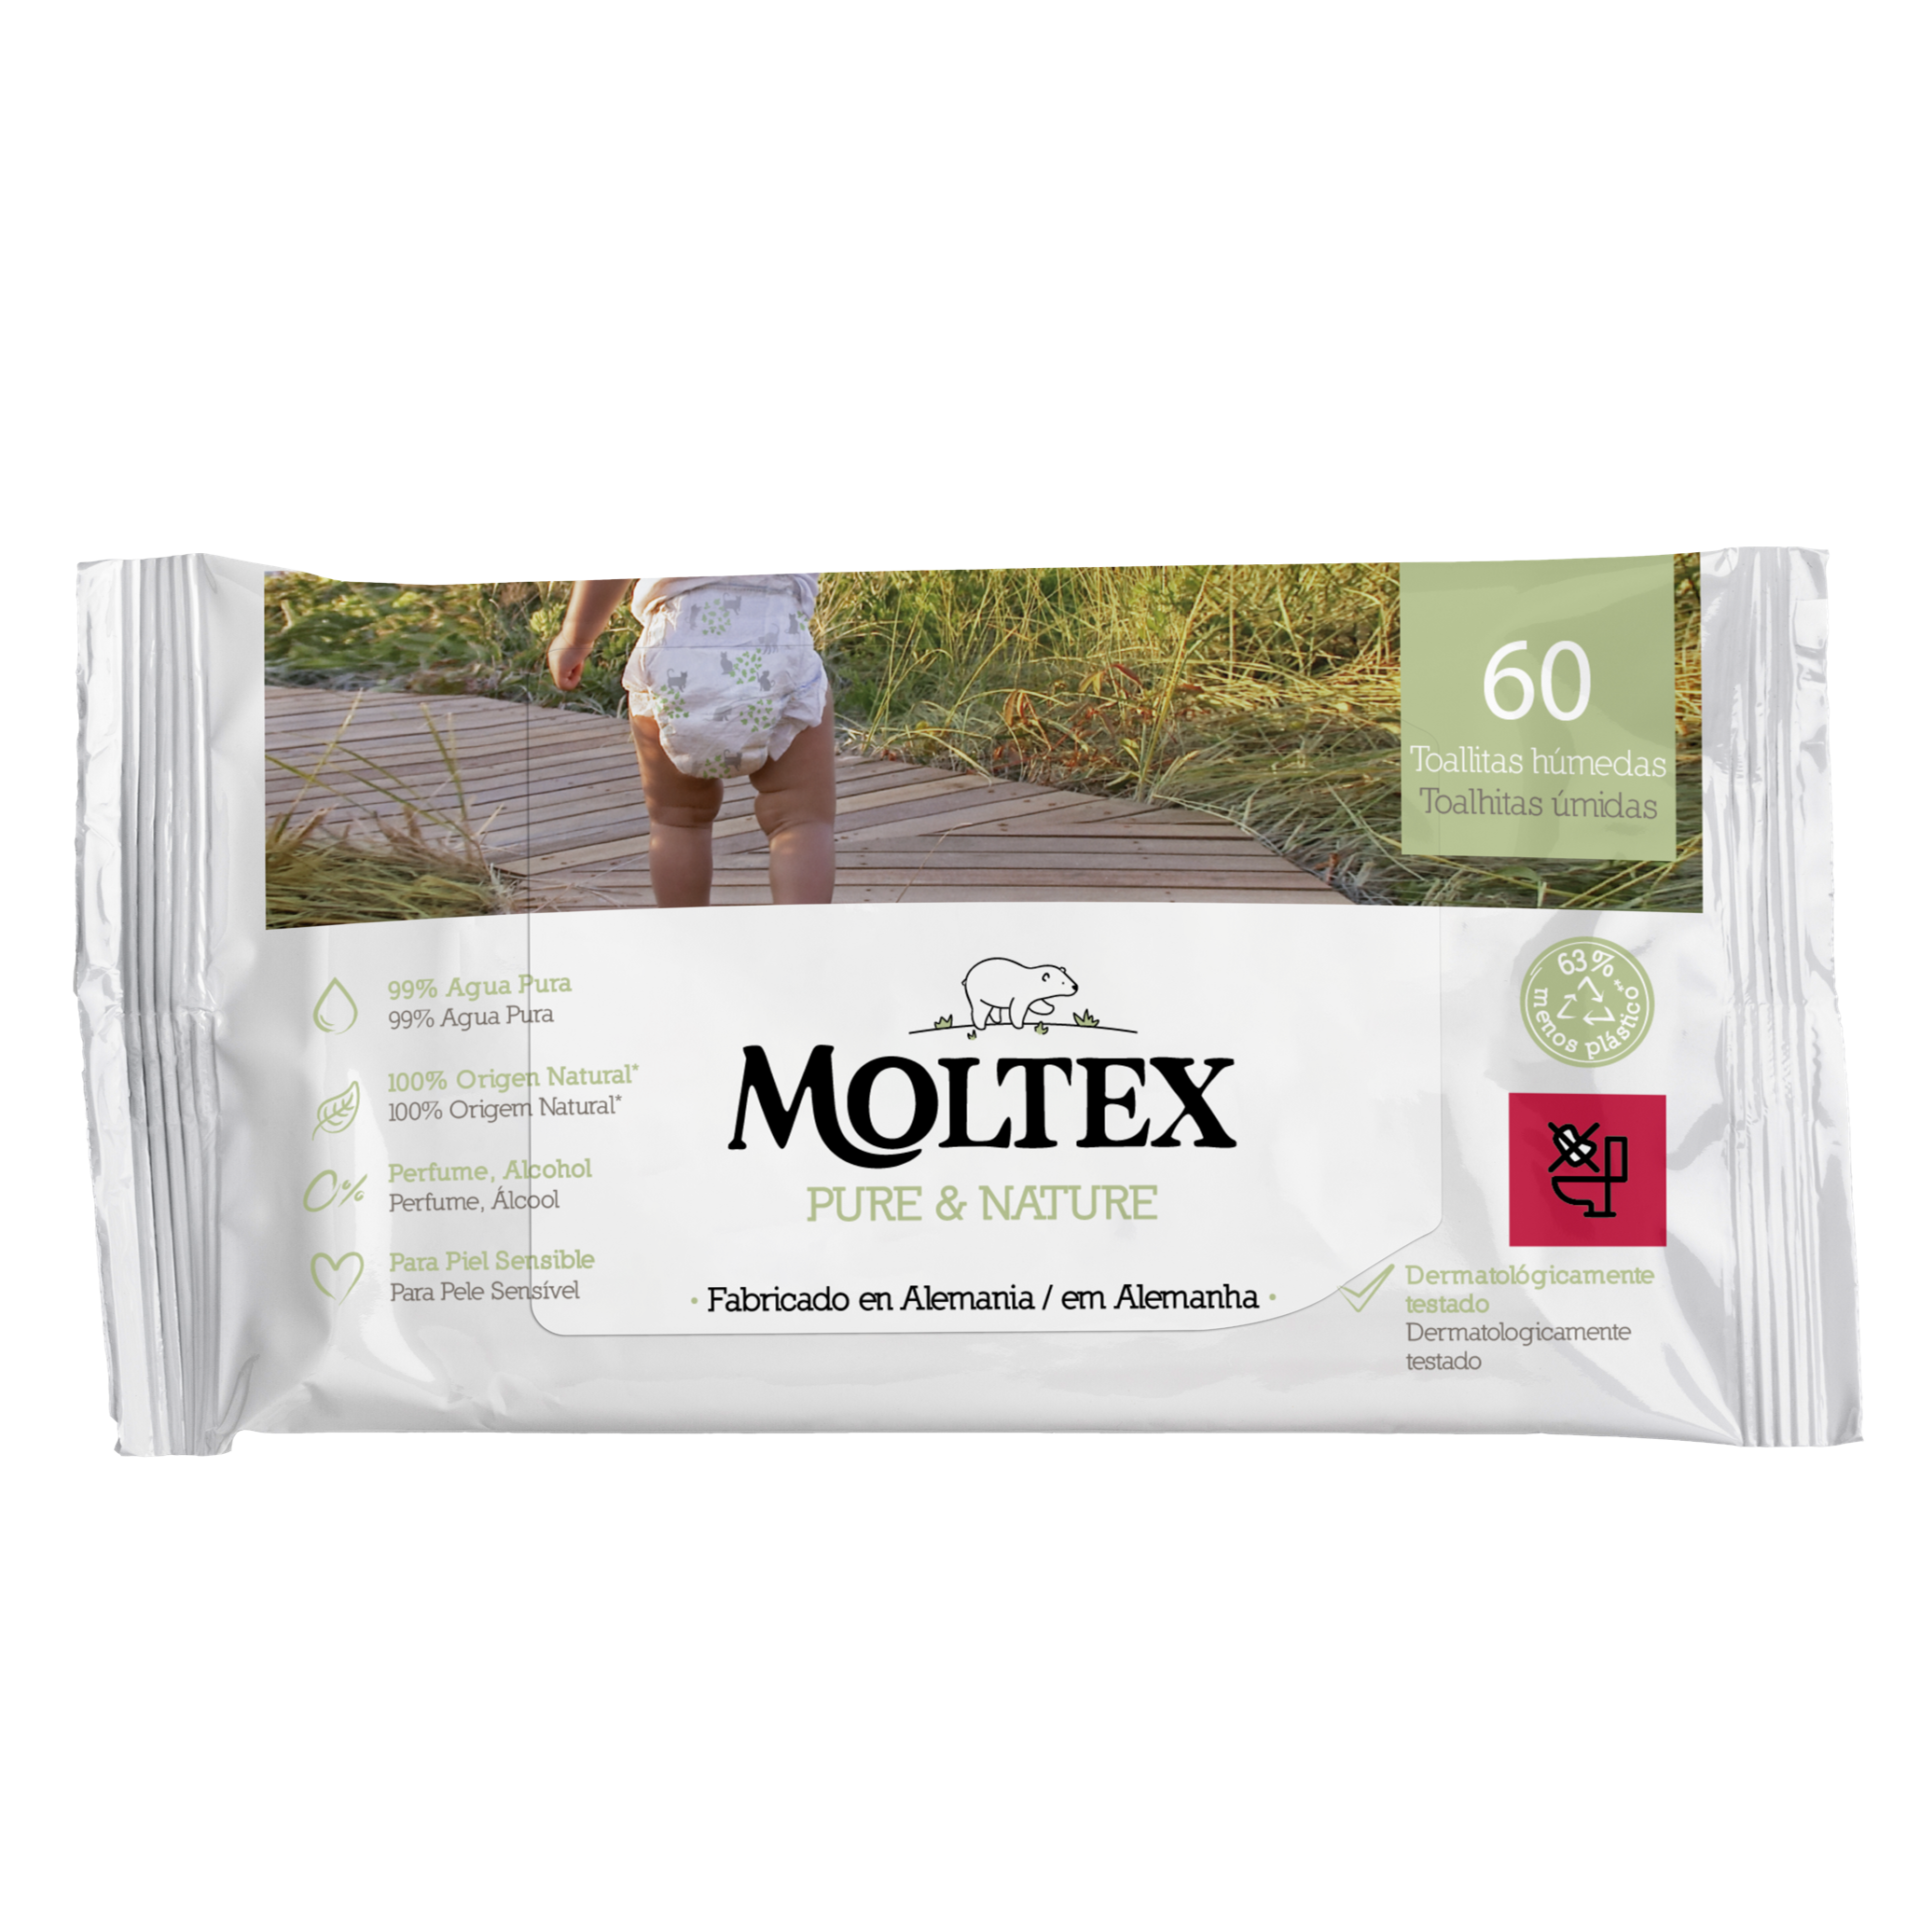 Moltex wet wipes